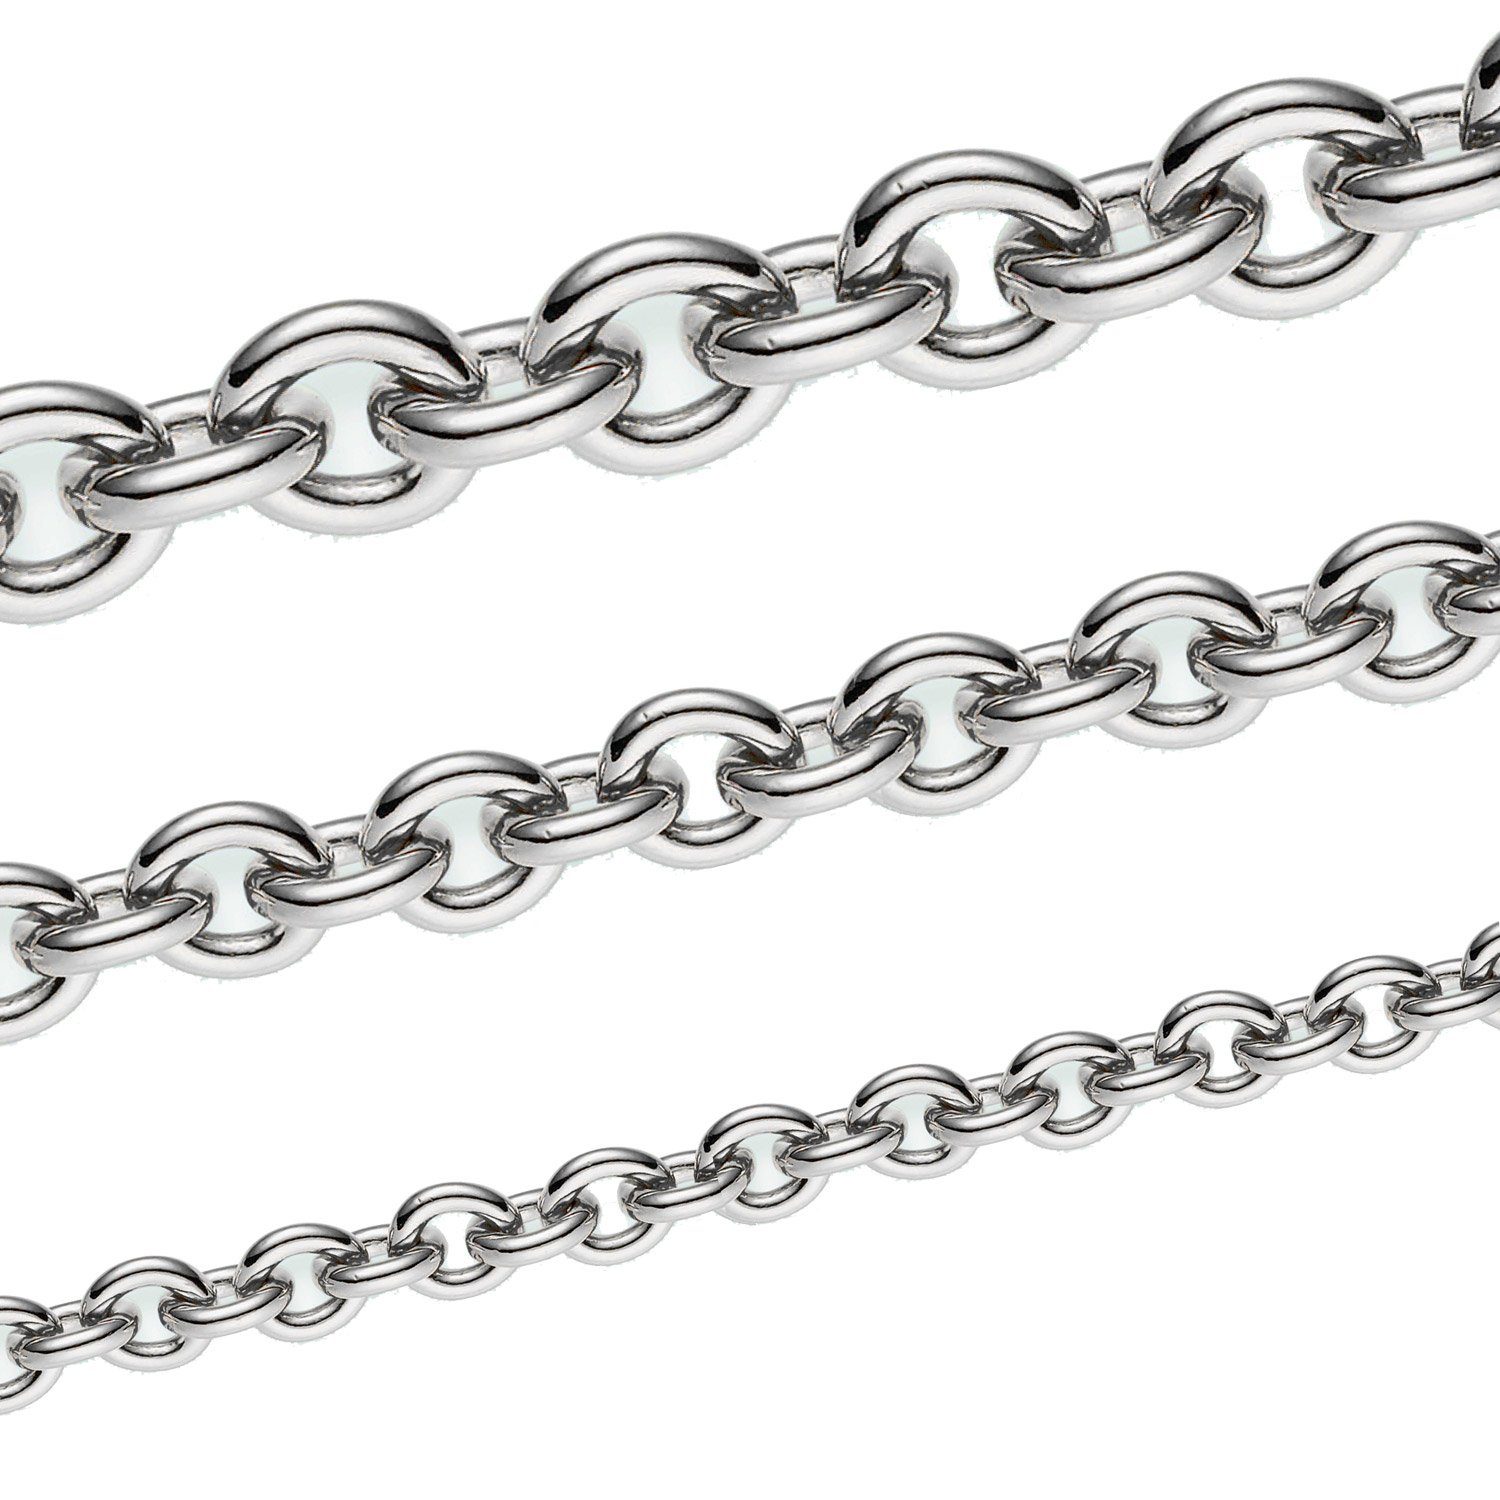 HOPLO Silberkette Ankerkette Halskette - Legierung 925 Sterlingsilber -  Kettenbreite 6,2 mm - Kettenlänge 55 cm, Made in Germany